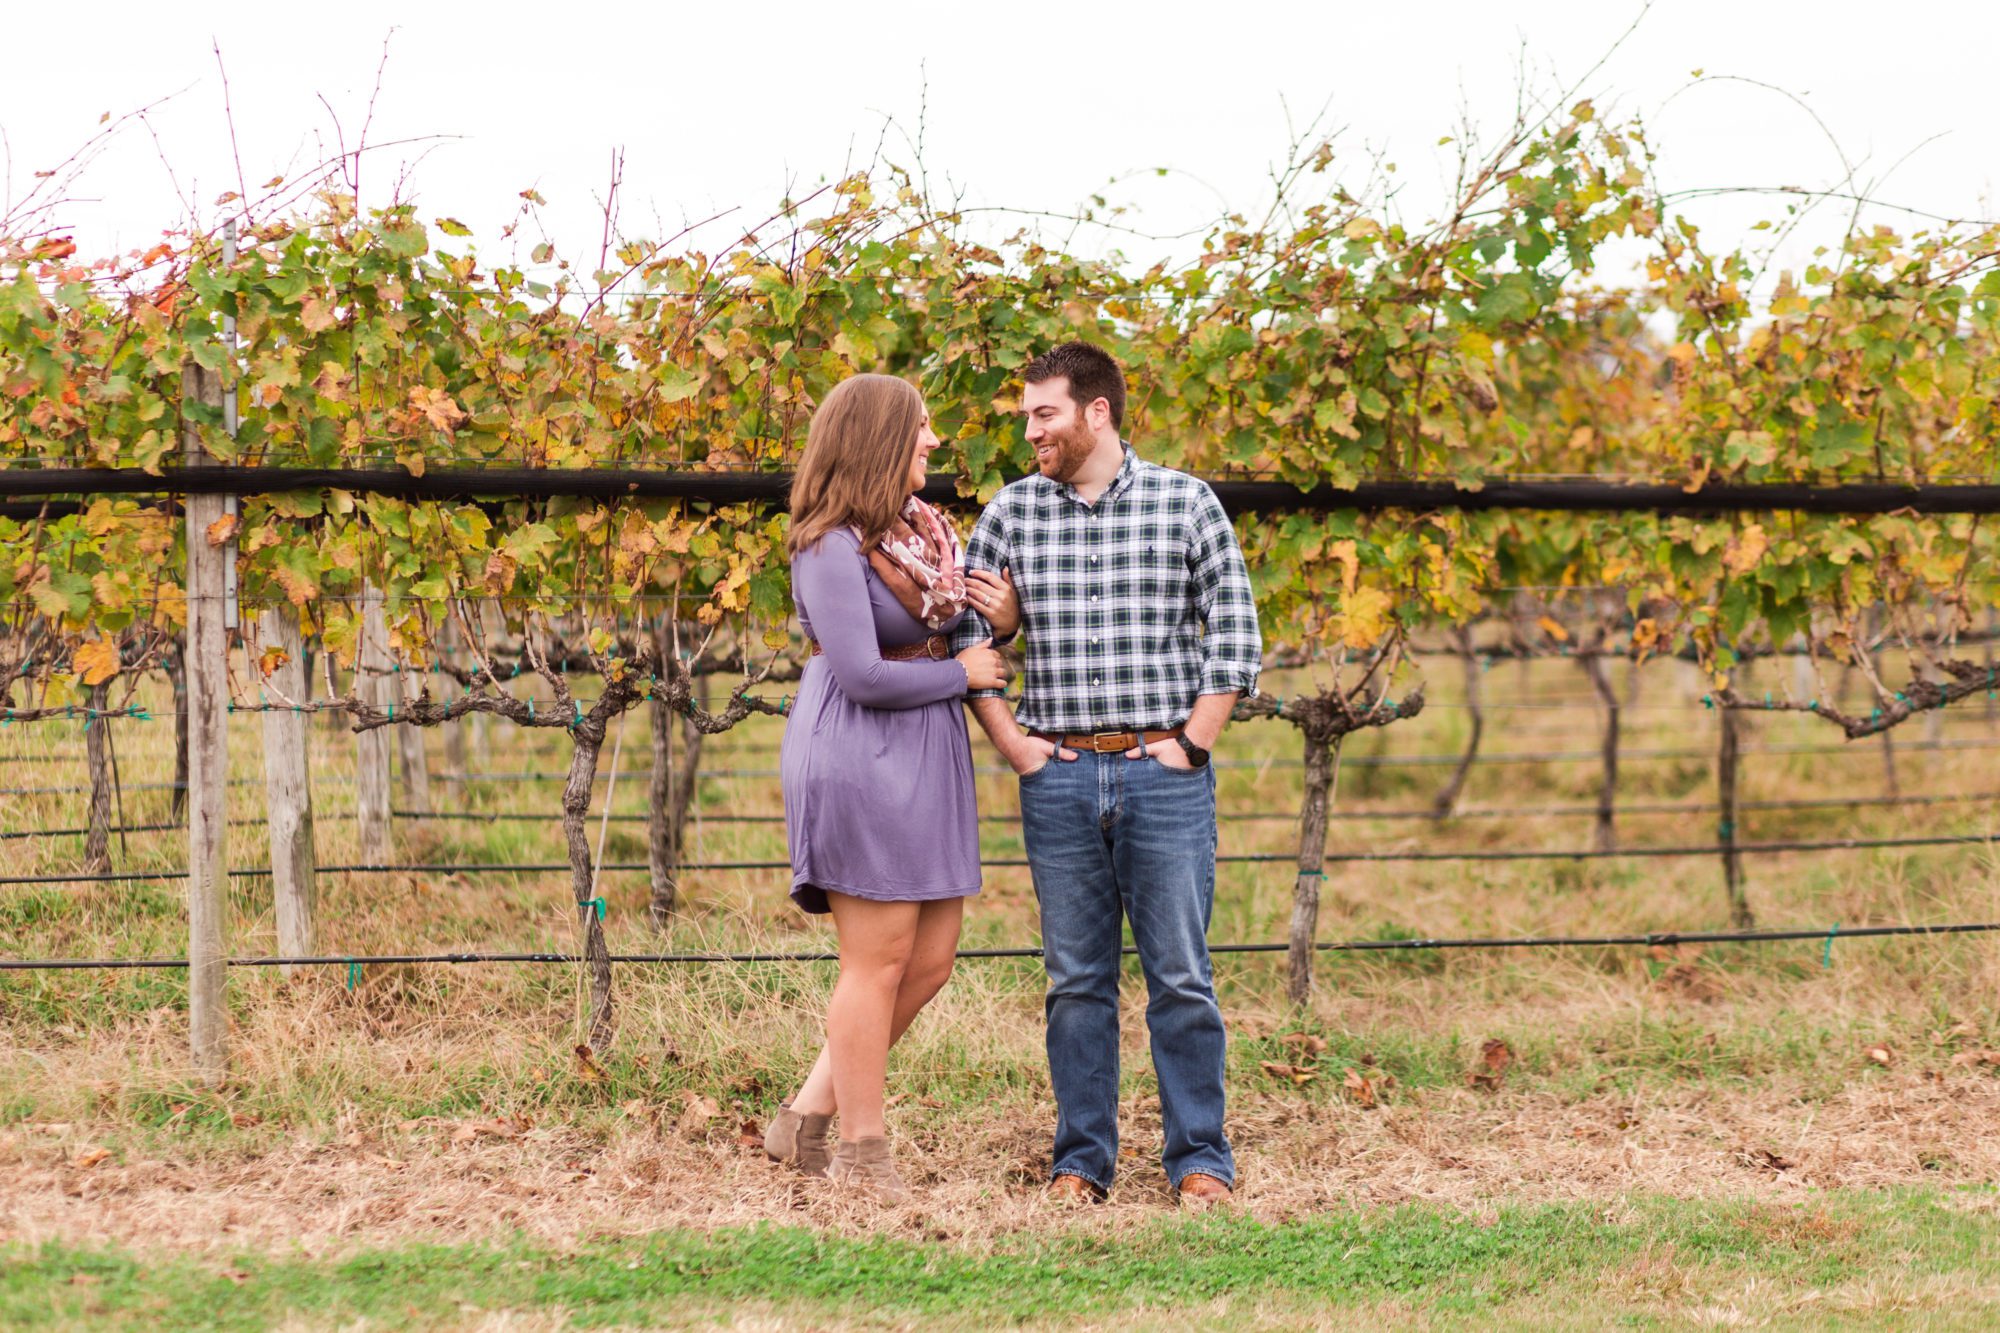 Williamsburg Winery Engagement Session, Diana Gordon Photography, photo